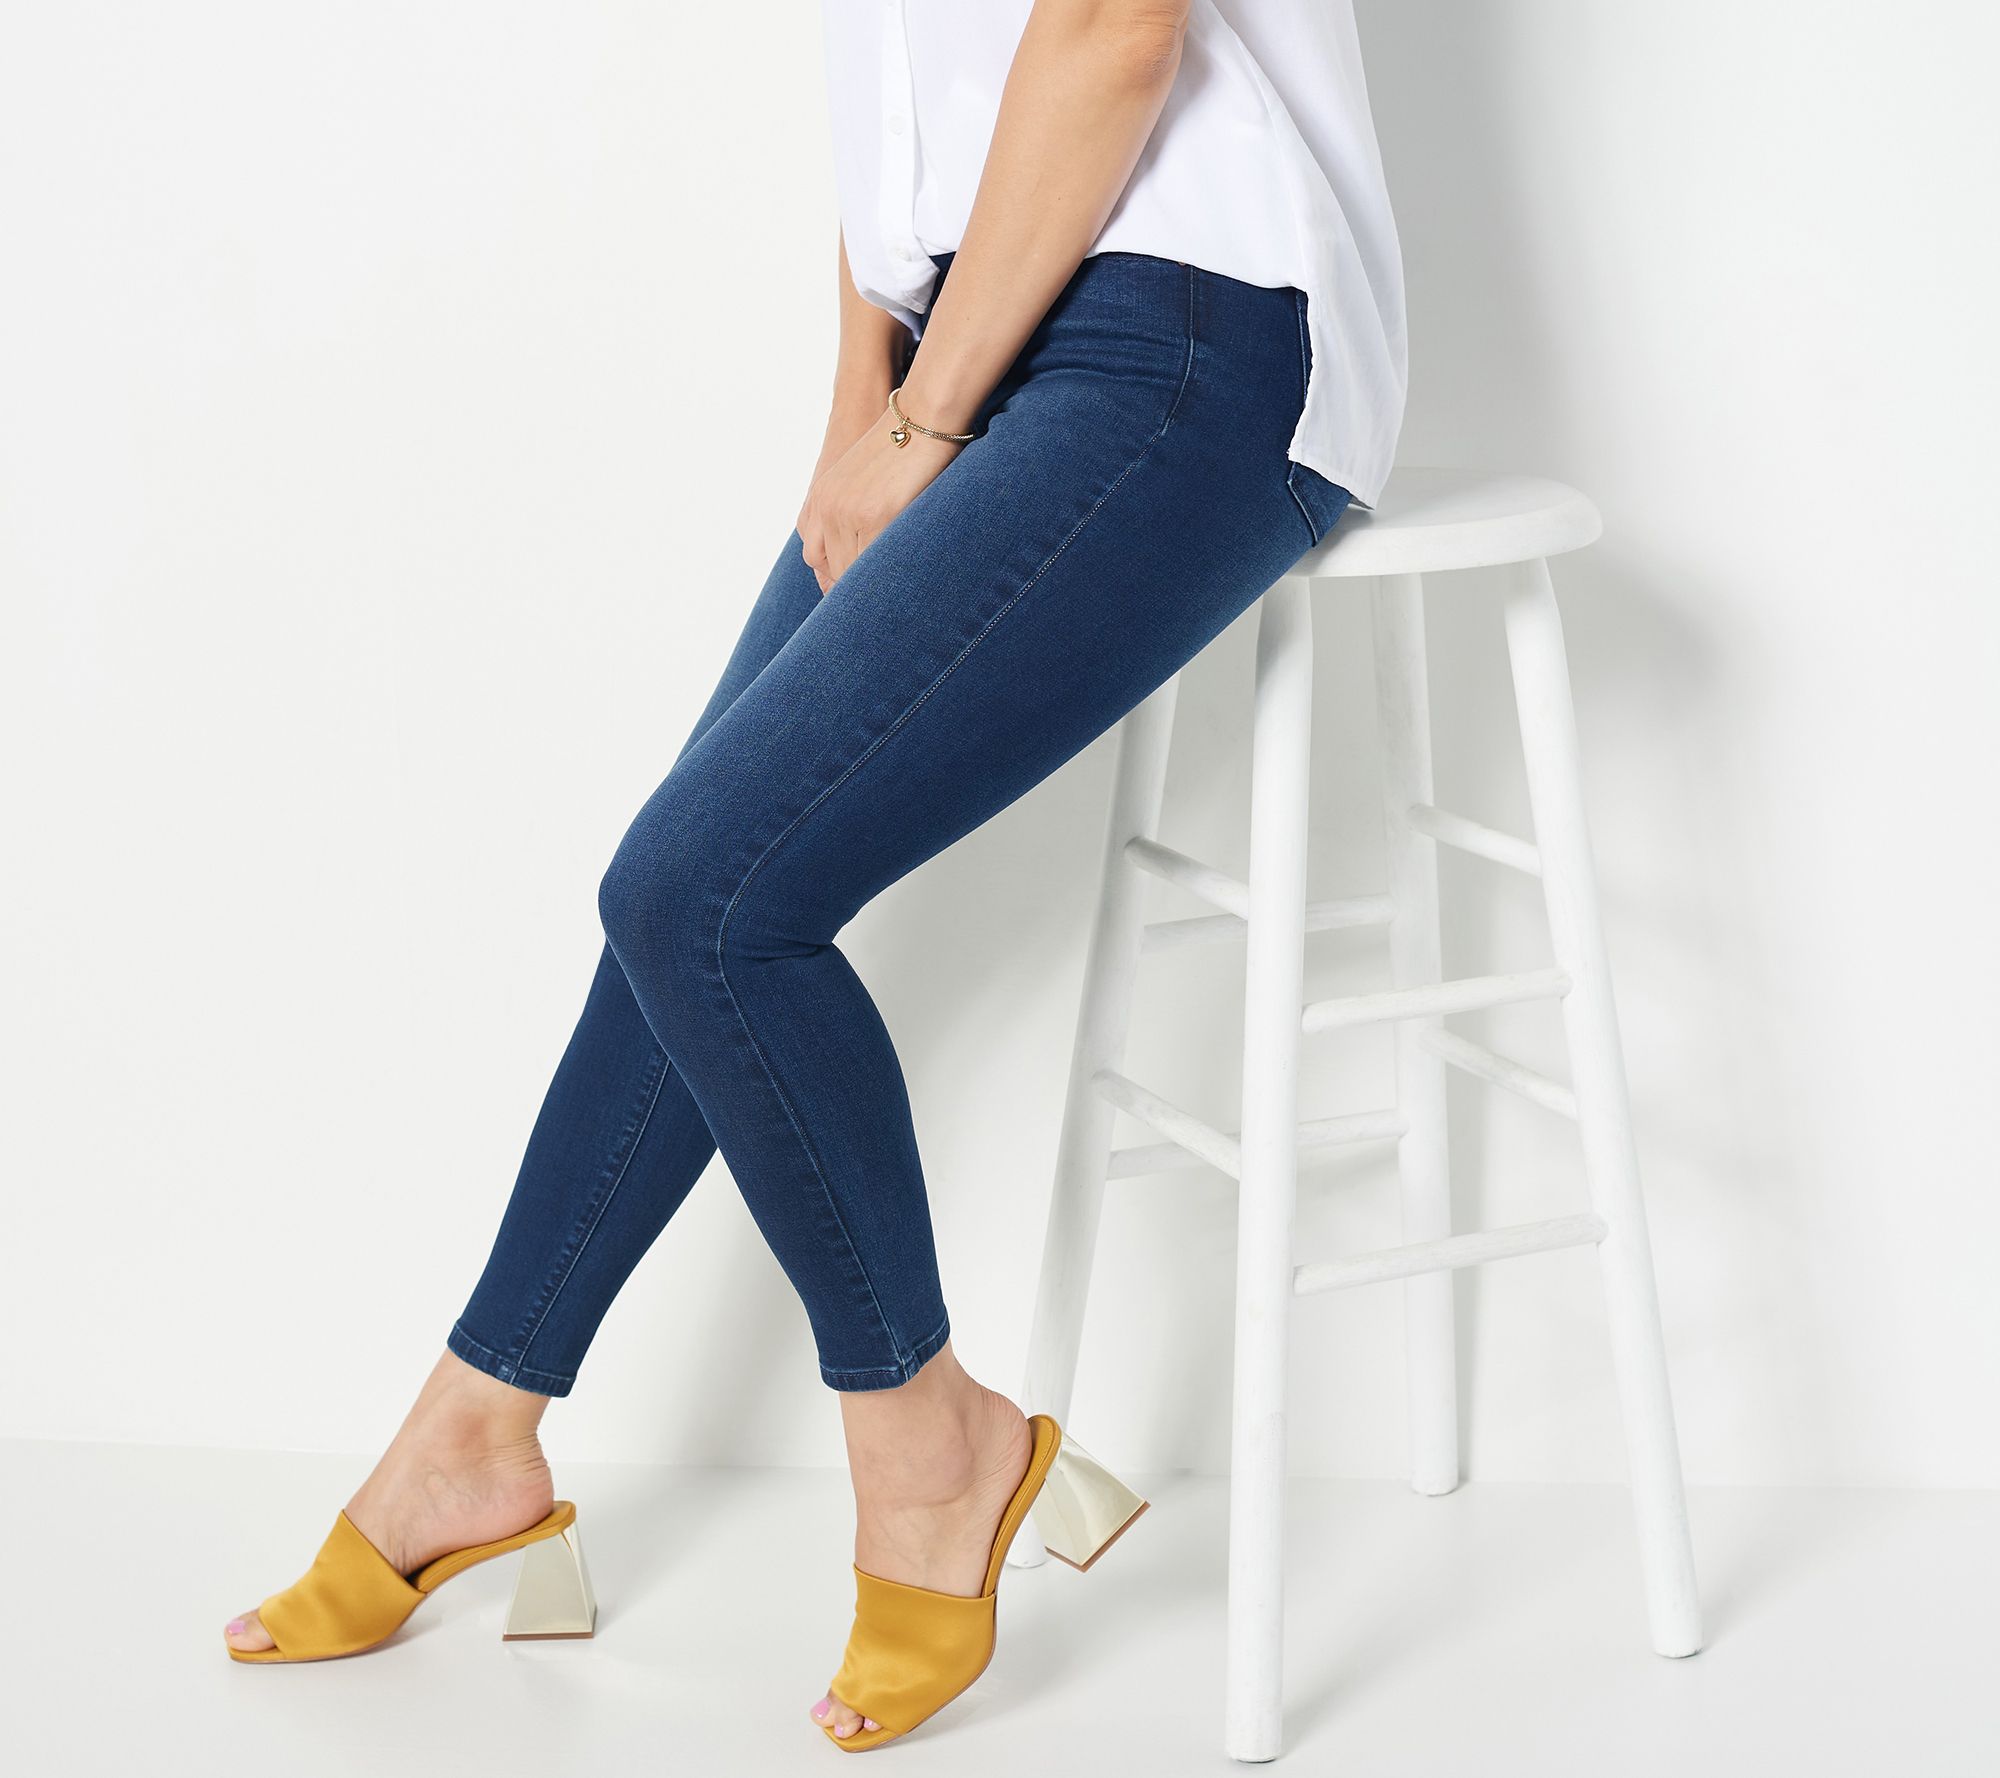 Laurie Felt Petite BFF Ankle Skinny Jeans - QVC.com